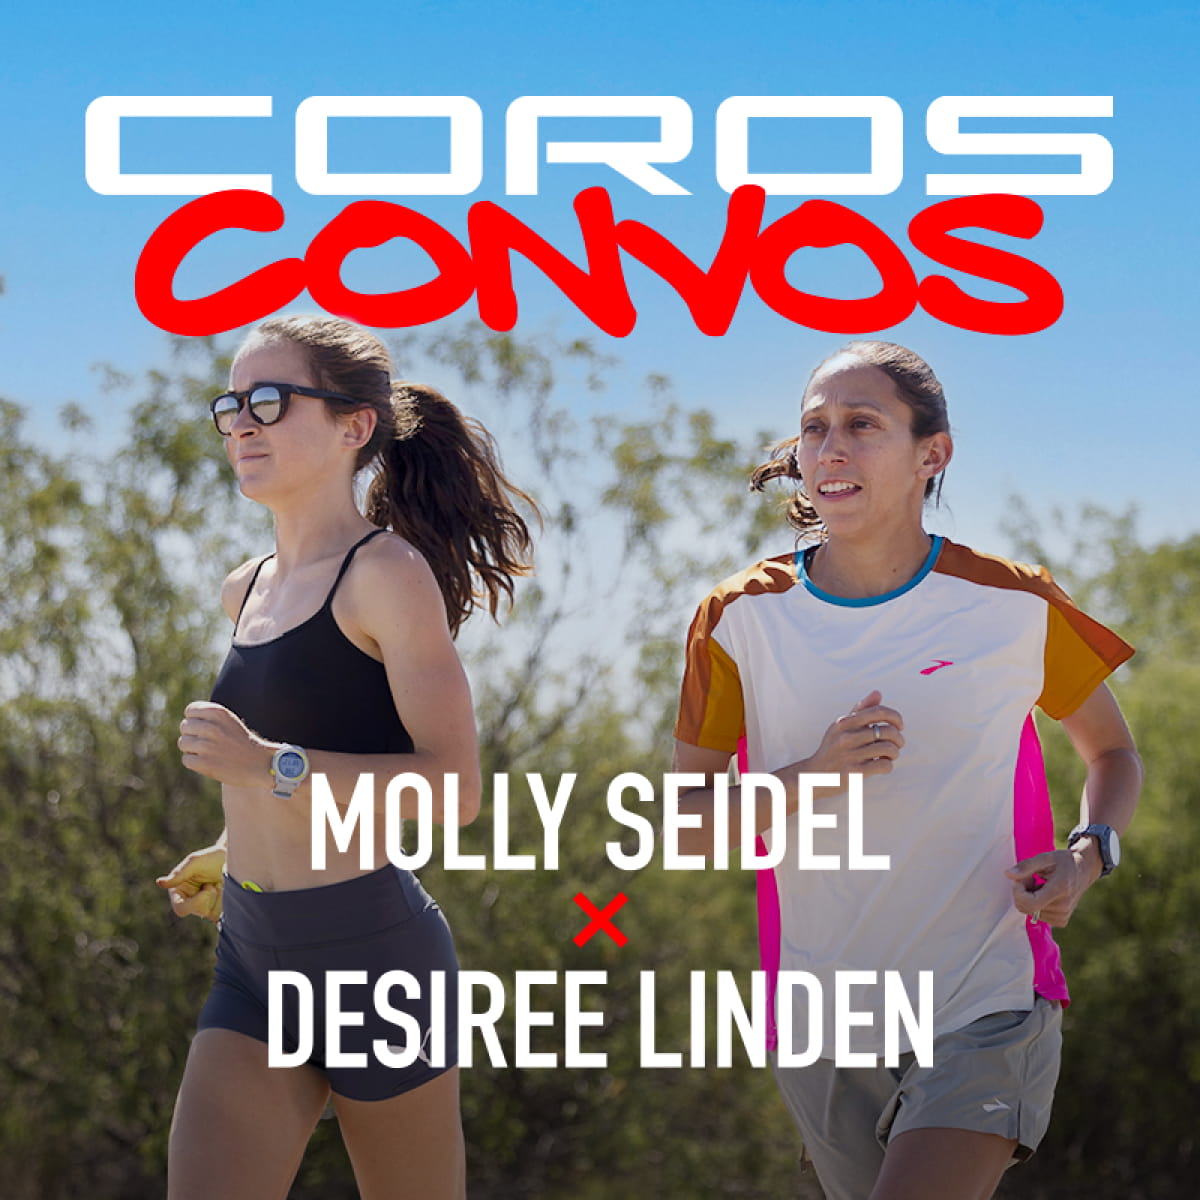 COROS PACE 2 GPS Sport Watch Molly Seidel Edition 